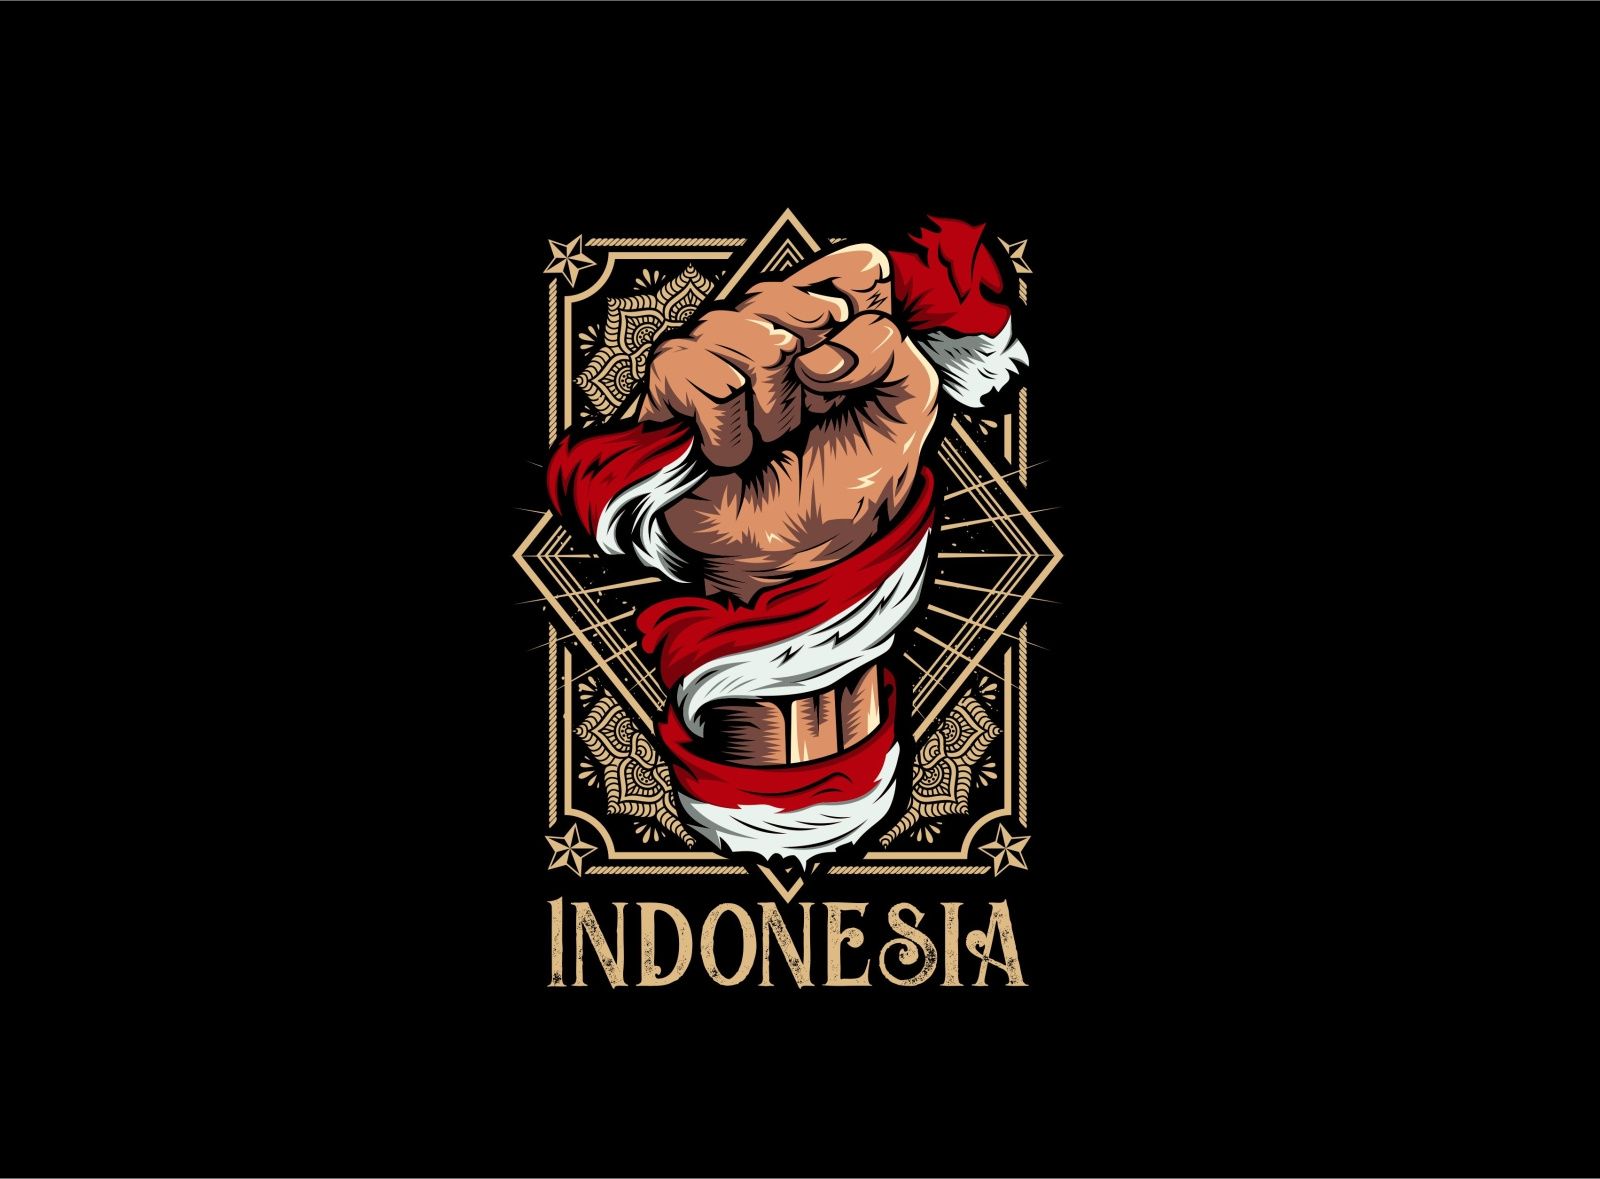 International Hacking Scenes: Indonesia